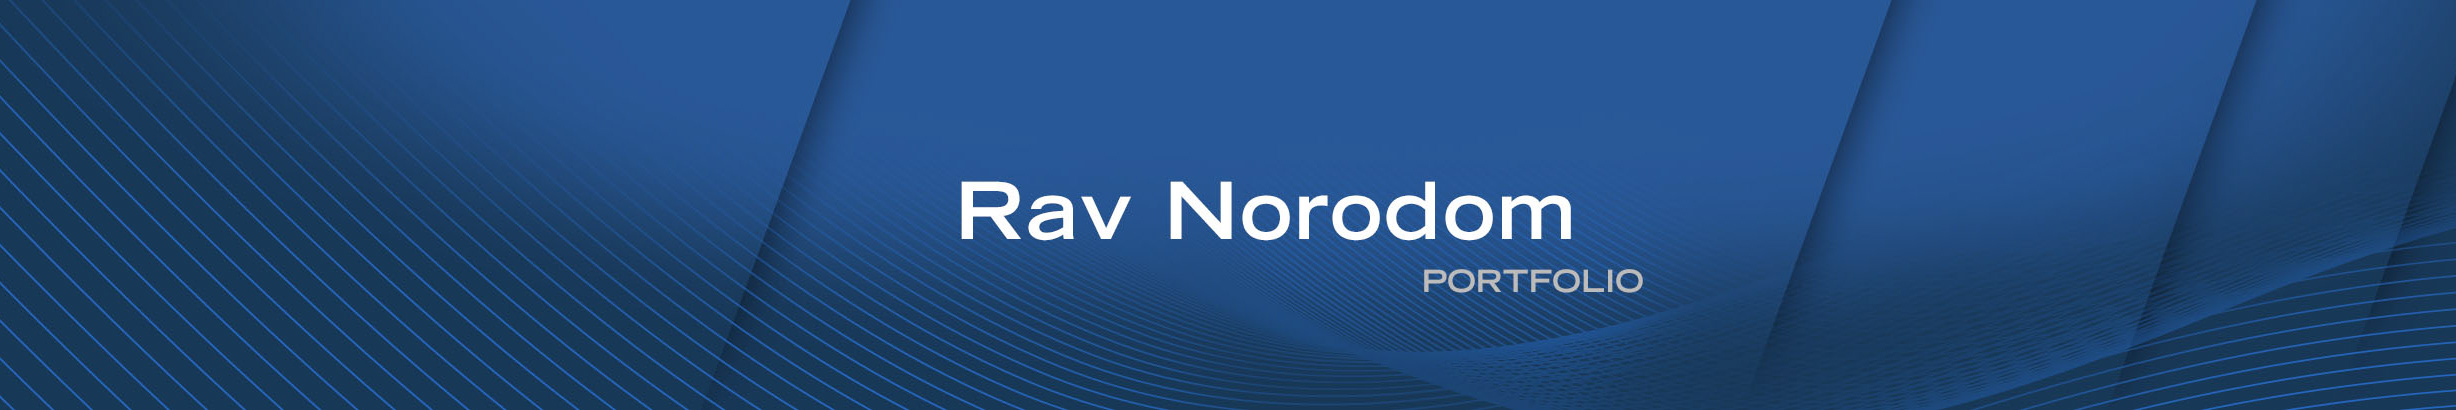 Rav Norodom profil başlığı